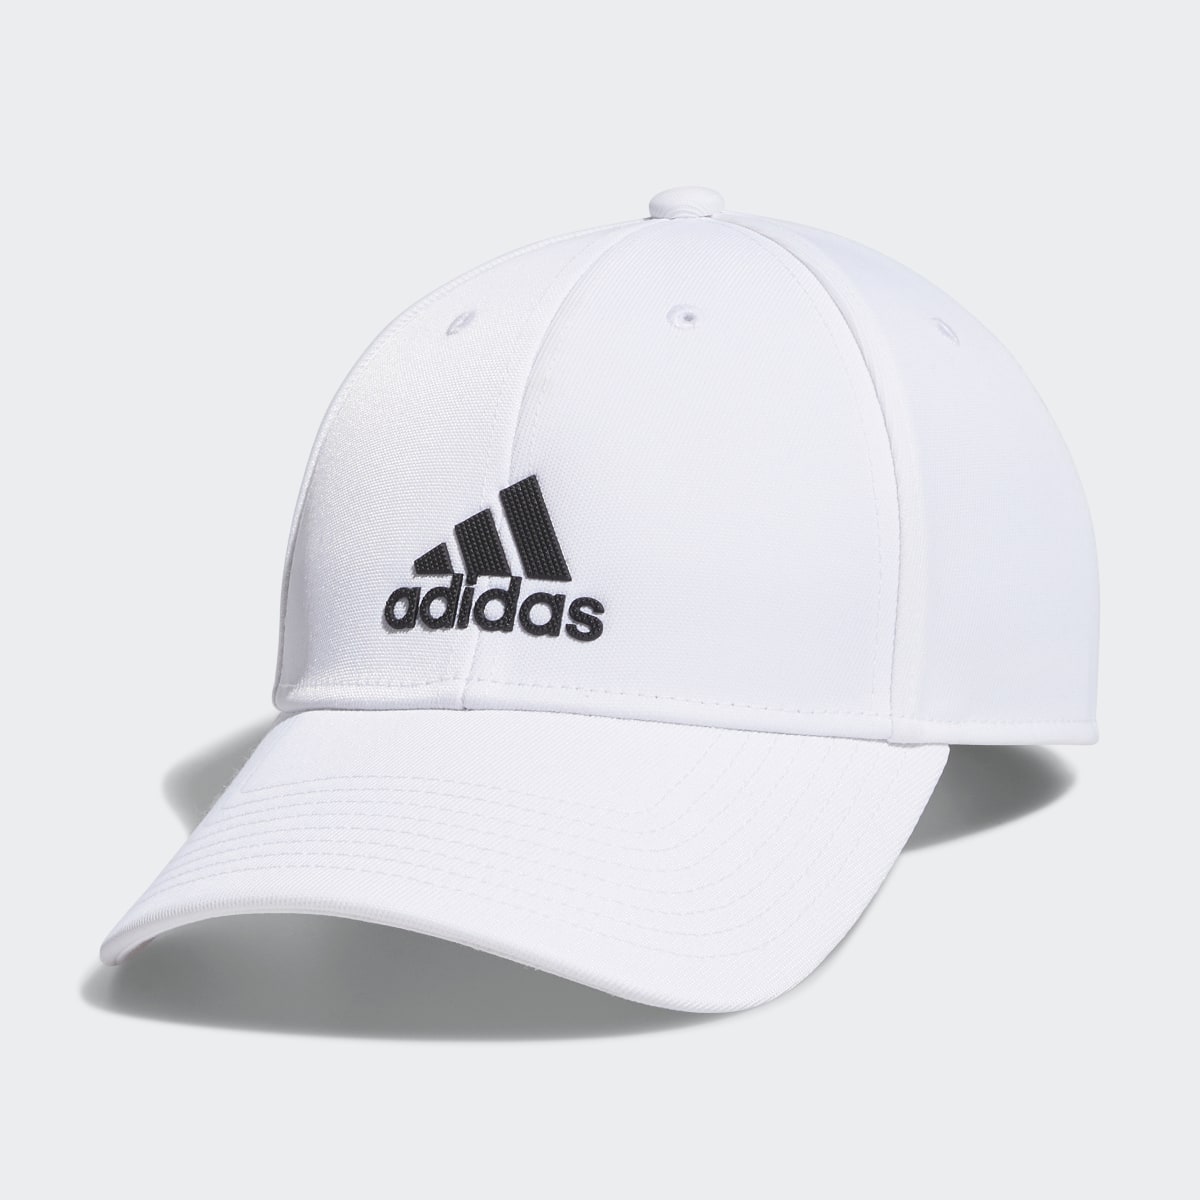 Adidas Decision Hat. 4